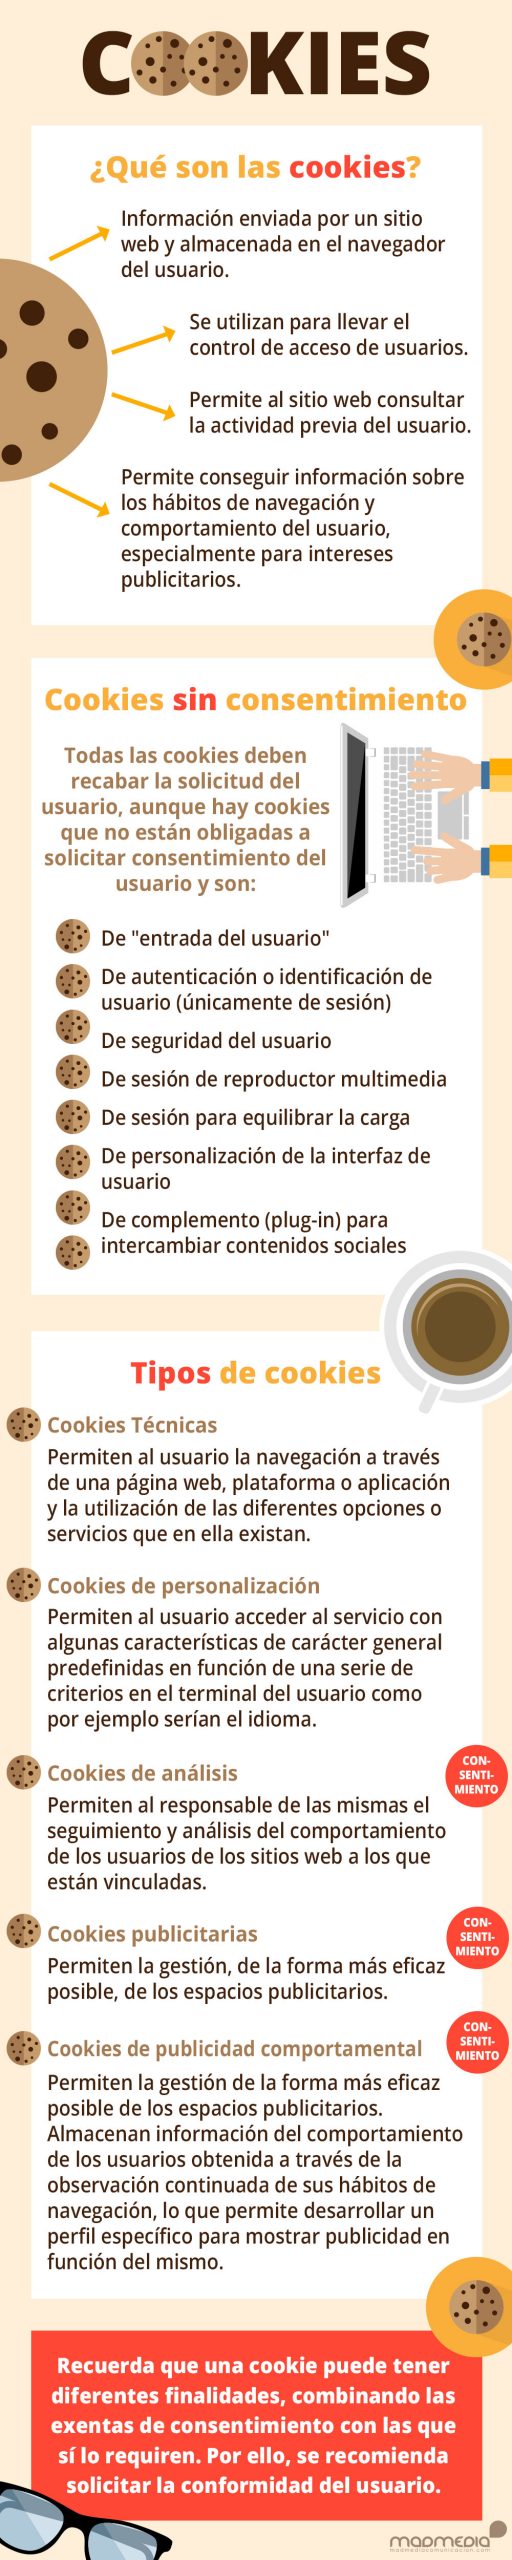 cookies-infografia